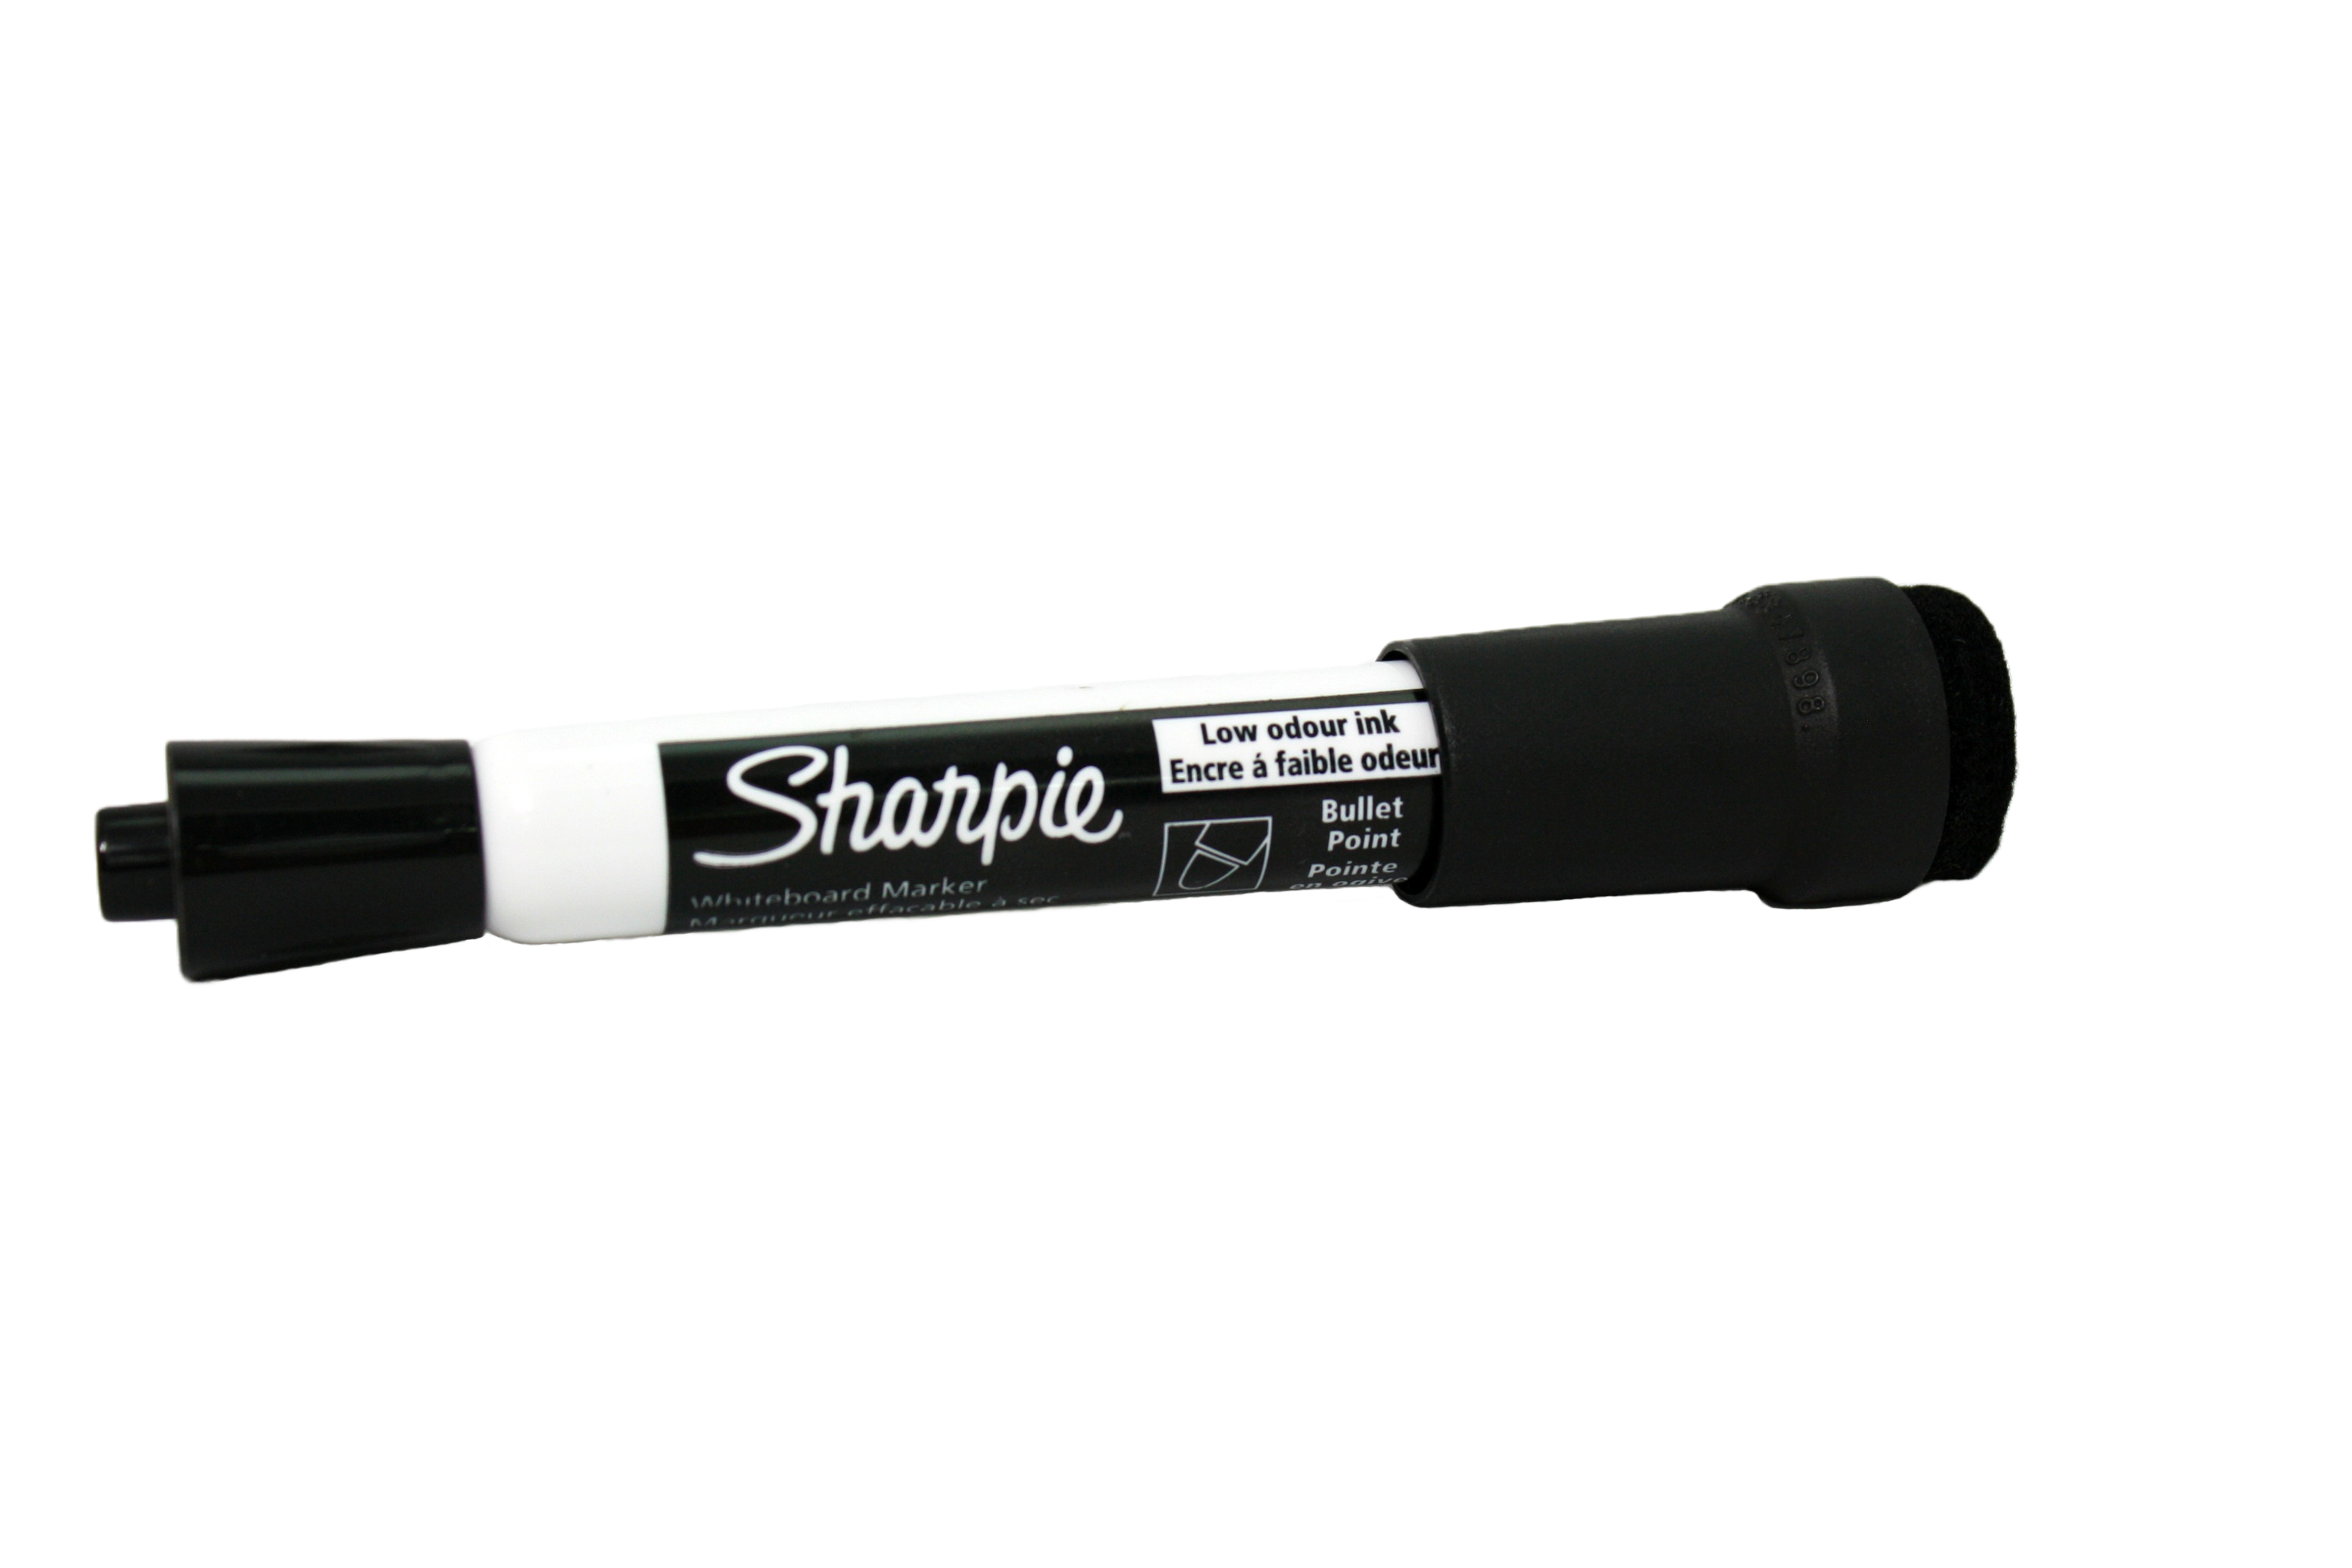 Sharpie whiteboard marker, black, with a KleenSlate eraser on the end